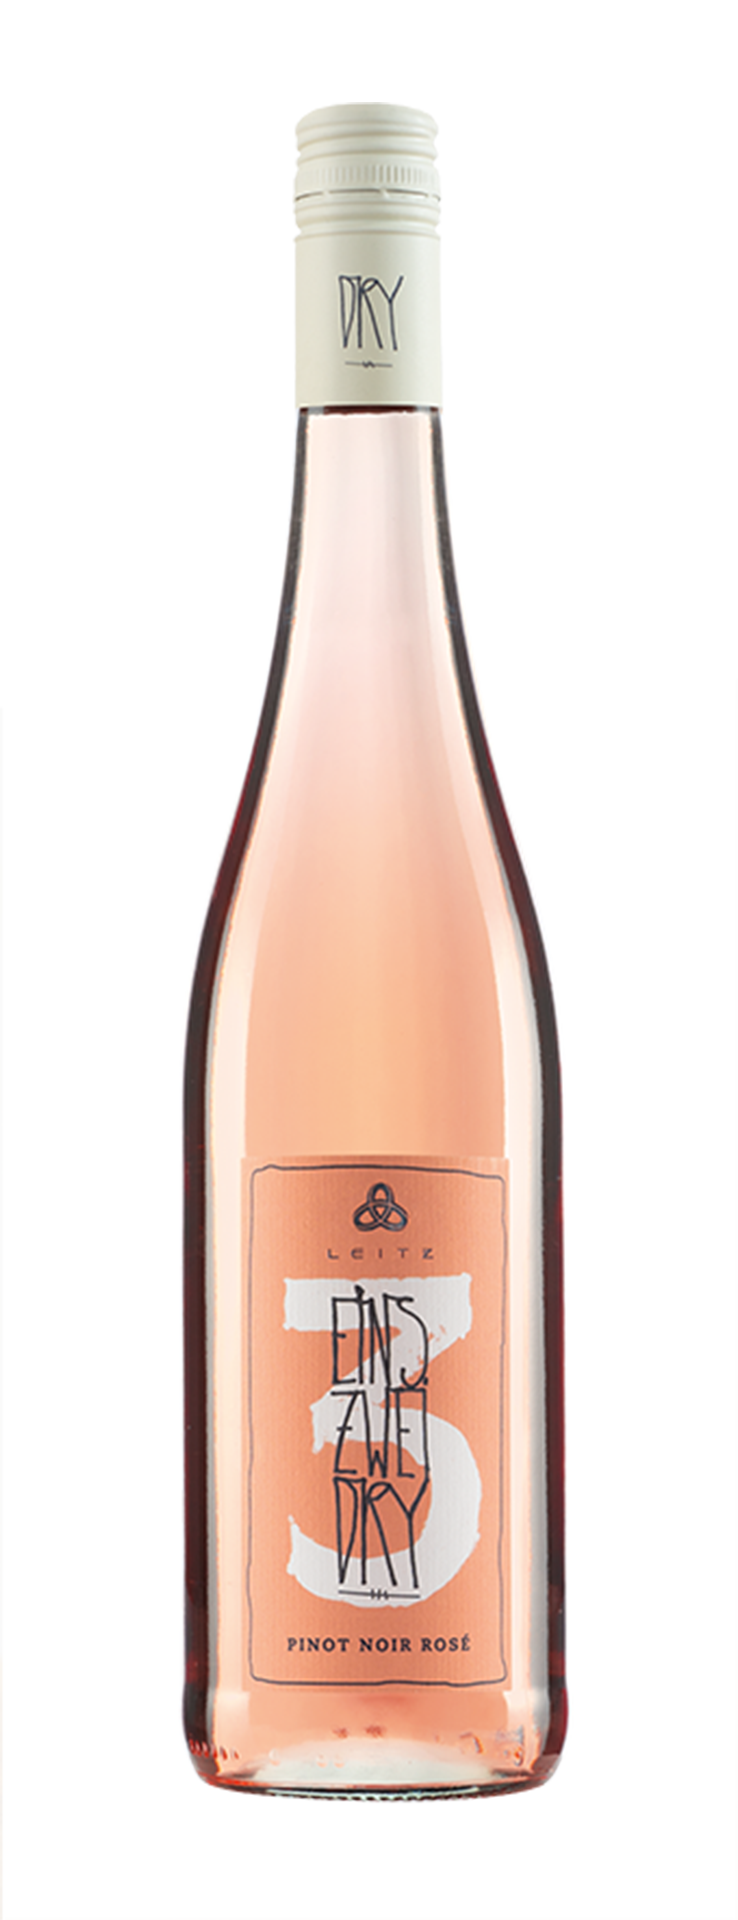 2021 EINS-ZWEI-DRY Rheingau Pinot Noir Rosé trocken